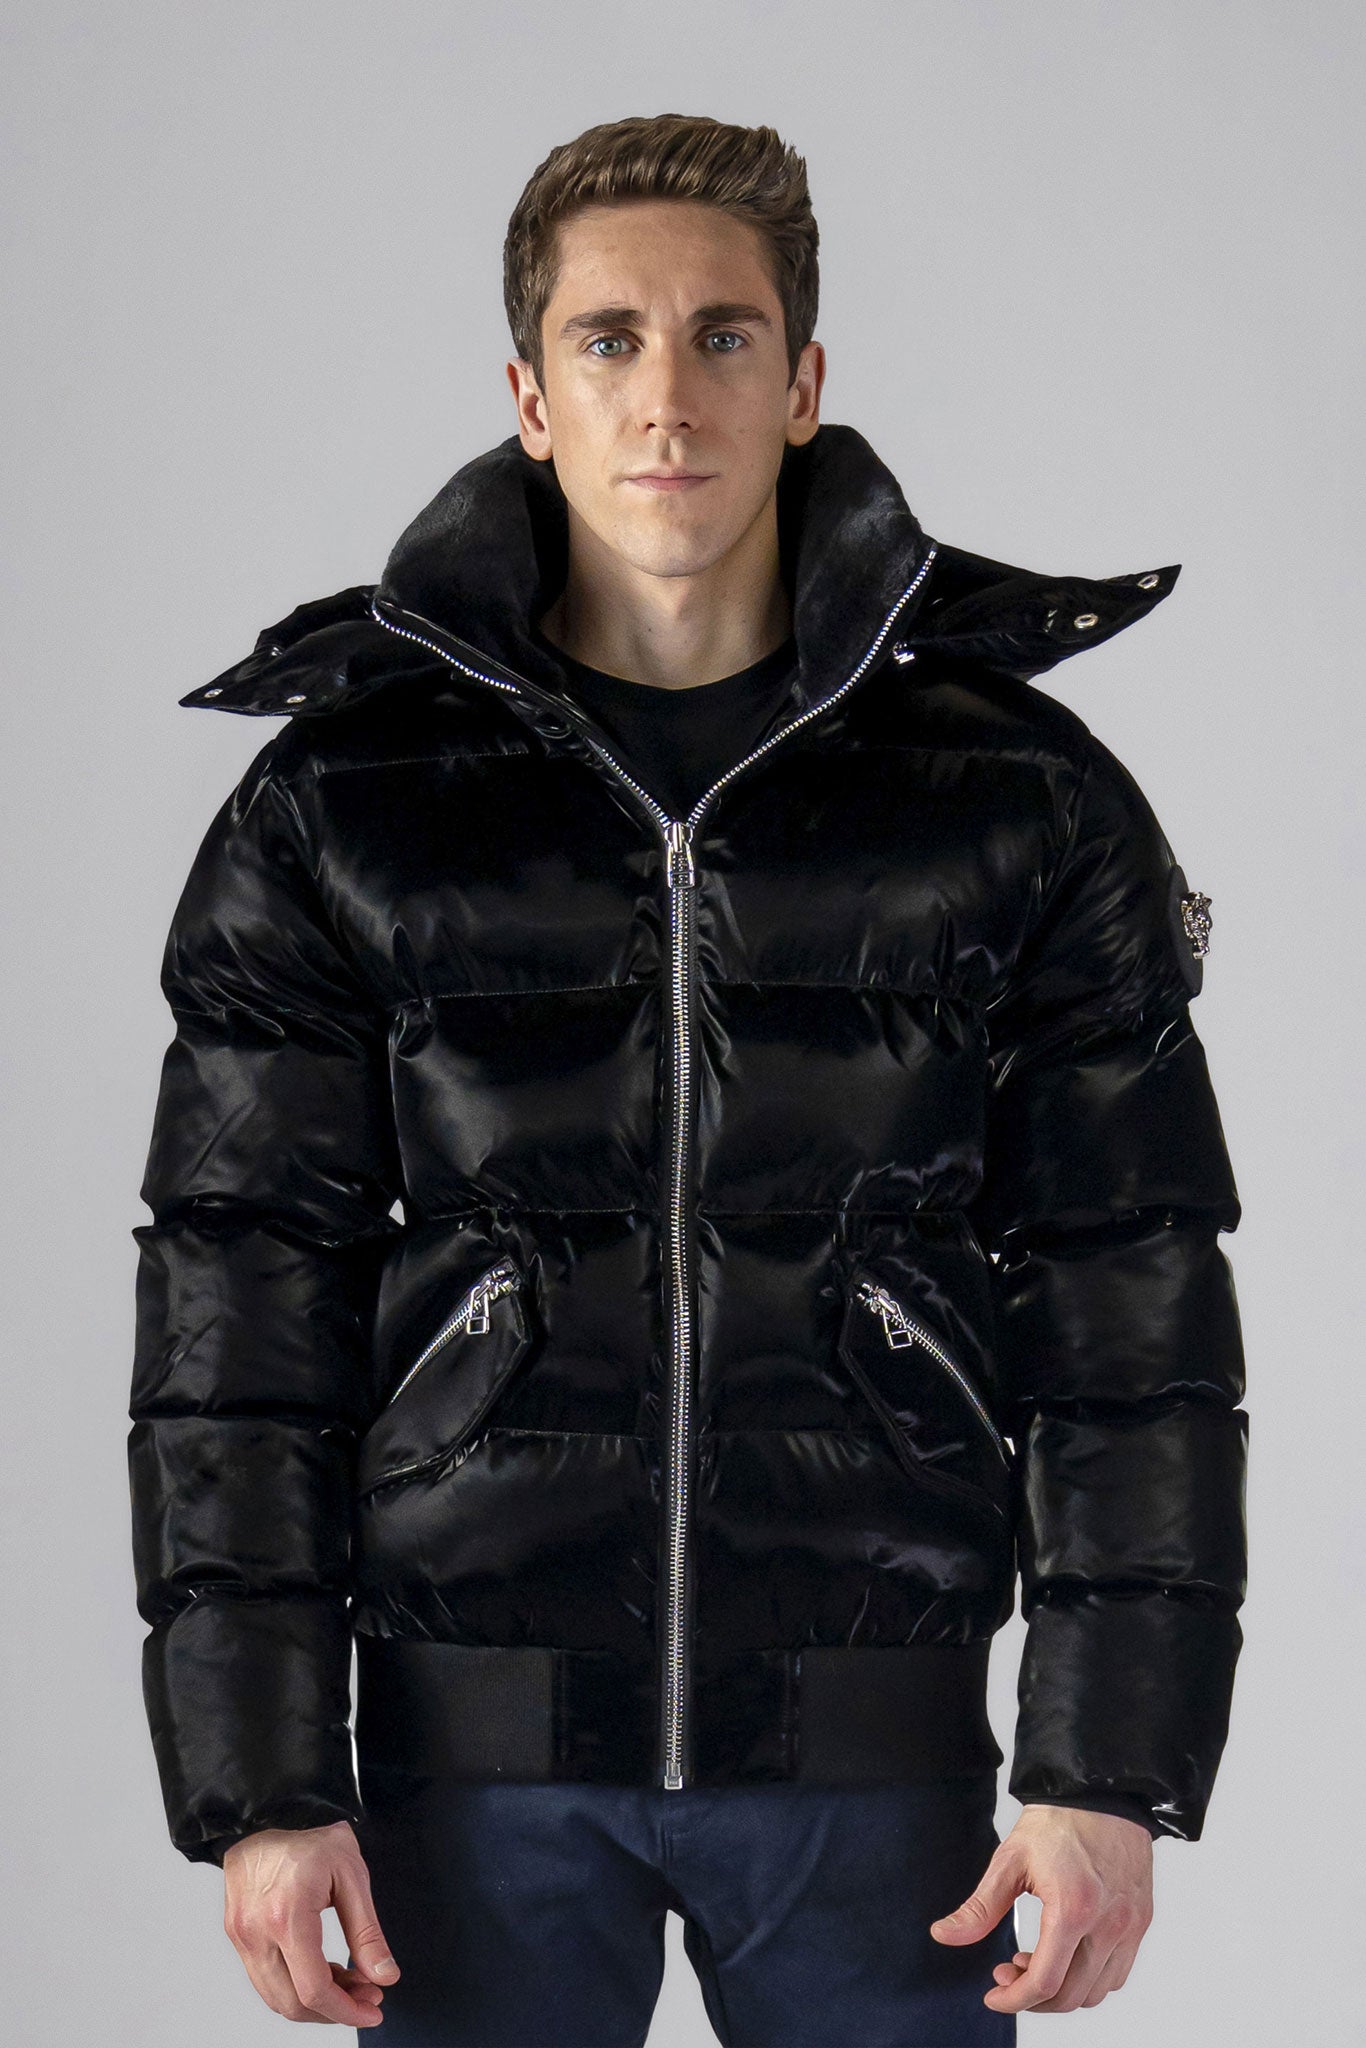 Woodpecker Men's Woody Bomber Winter coat. High-end Canadian designer winter coat for men in shiny “All Wet Black